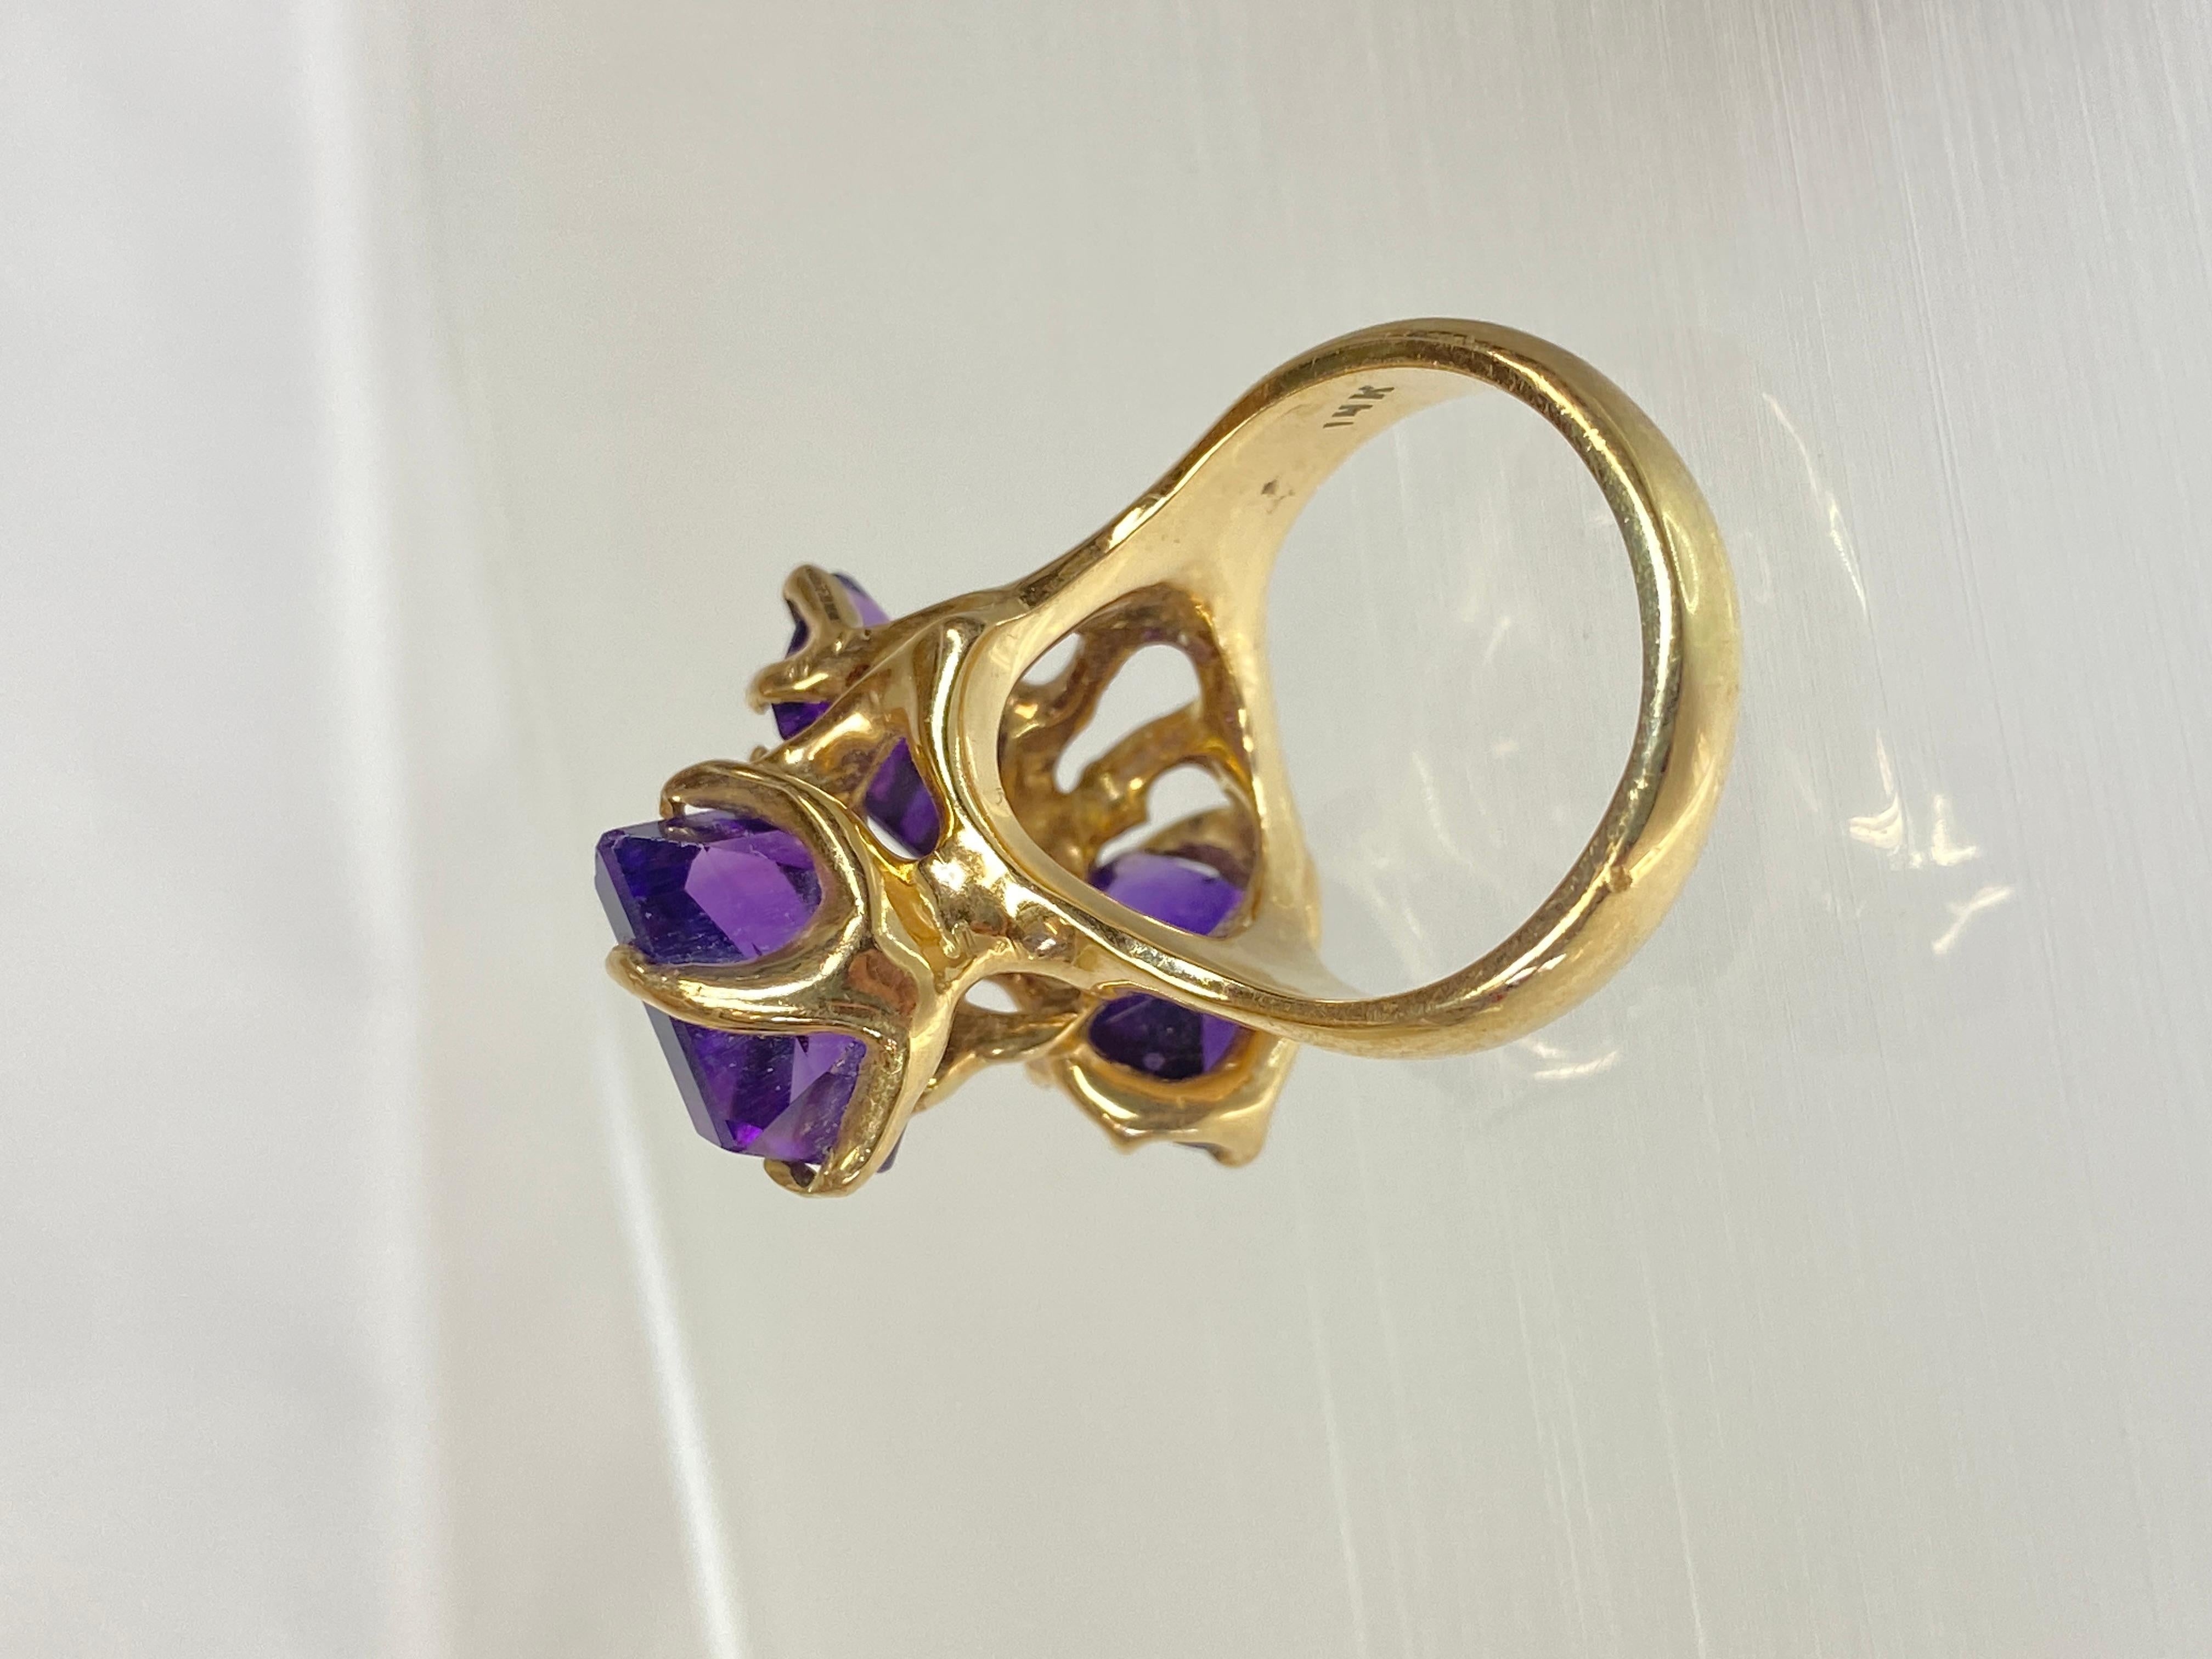 14K Yellow Gold Asymmetrical 3 Stone Amethyst Gemstone Ring Size 8.75 For Sale 3